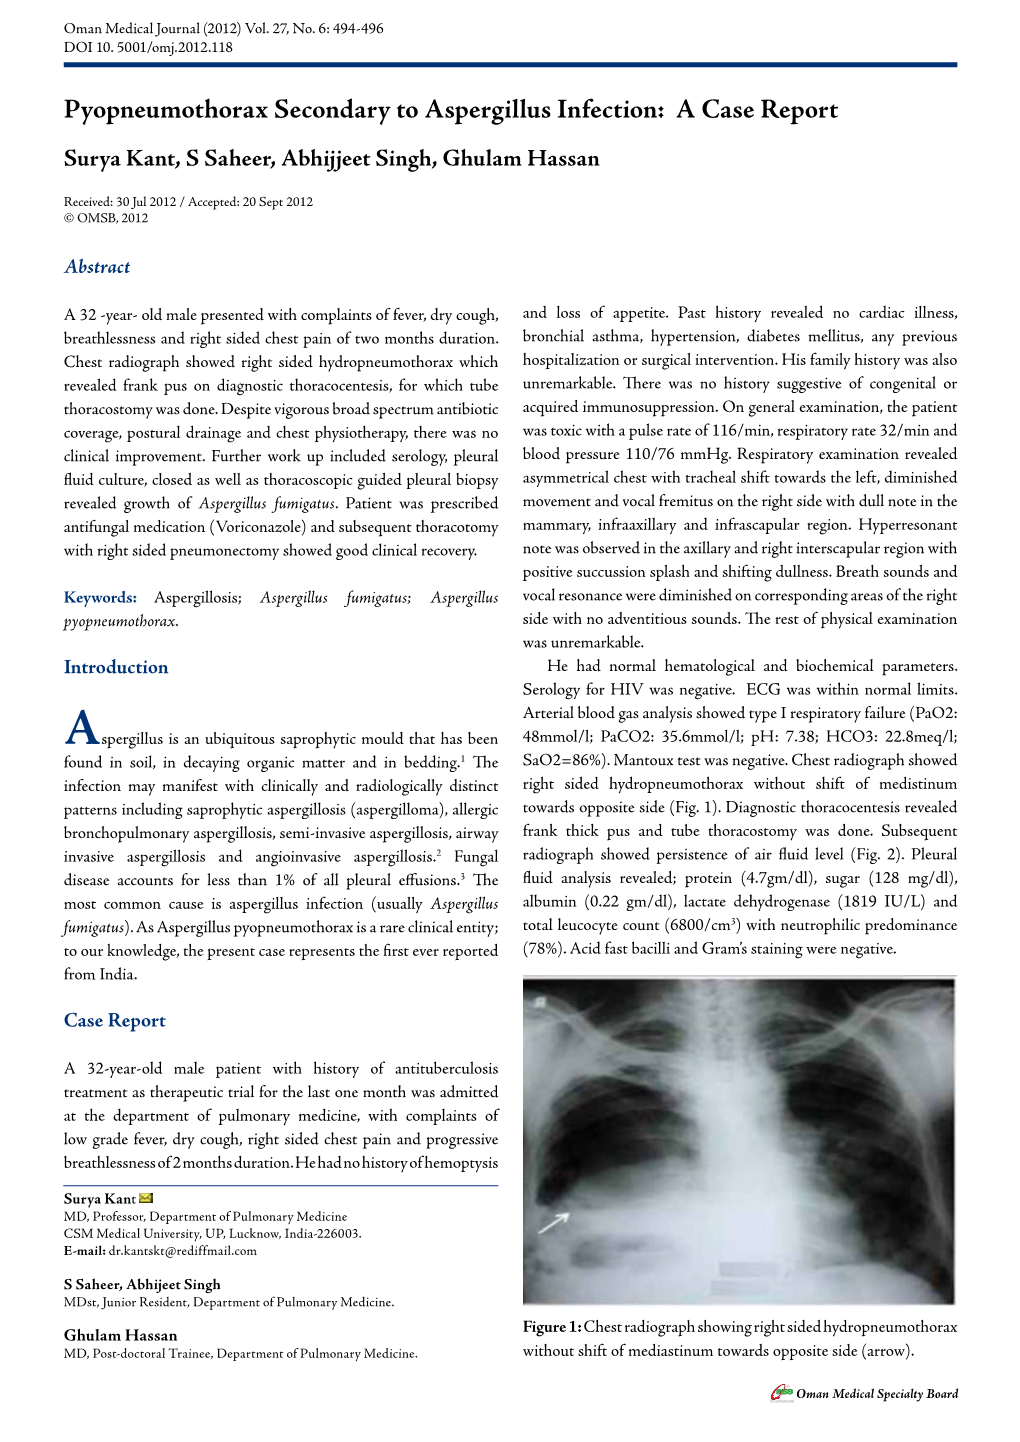 Pyopneumothorax Secondary to Aspergillus Infection: a Case Report Surya Kant, S Saheer, Abhijjeet Singh, Ghulam Hassan